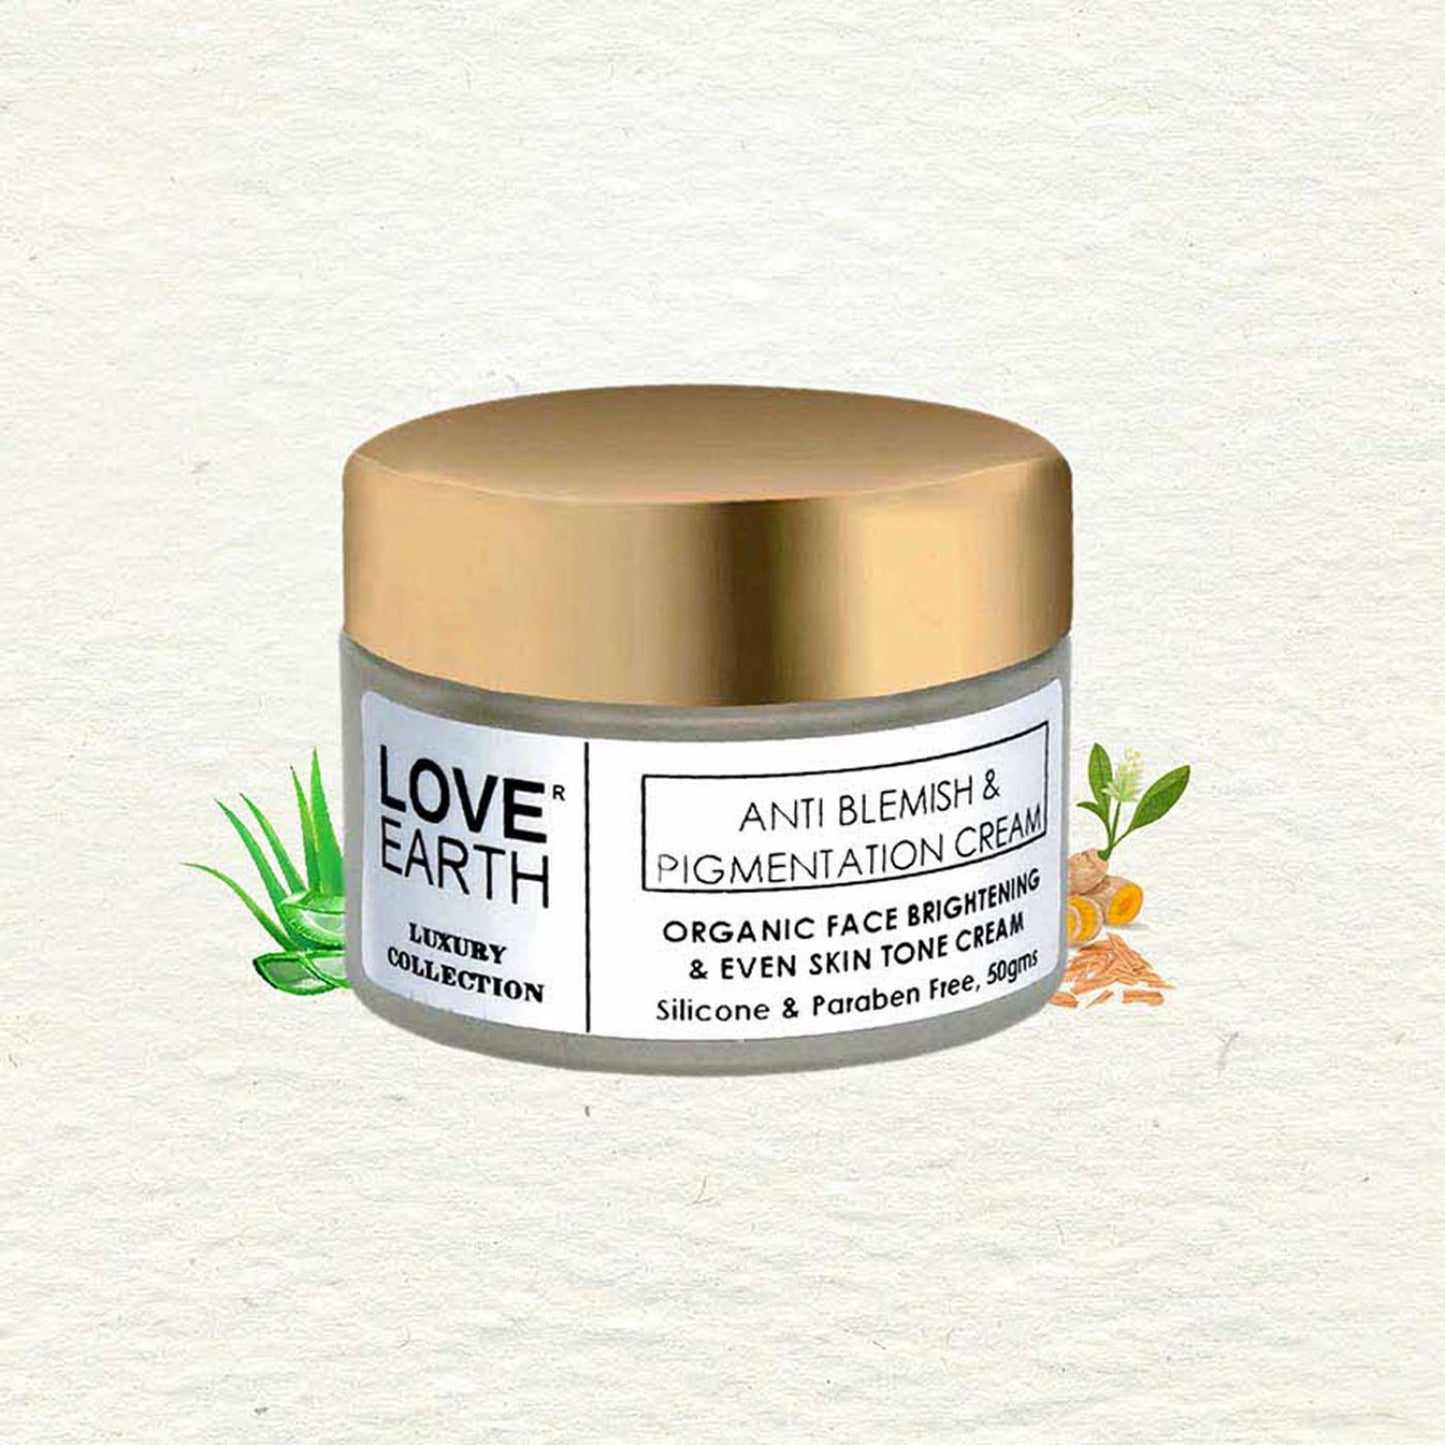 Love Earth Anti Blemish & Pigmentation Cream - 50g